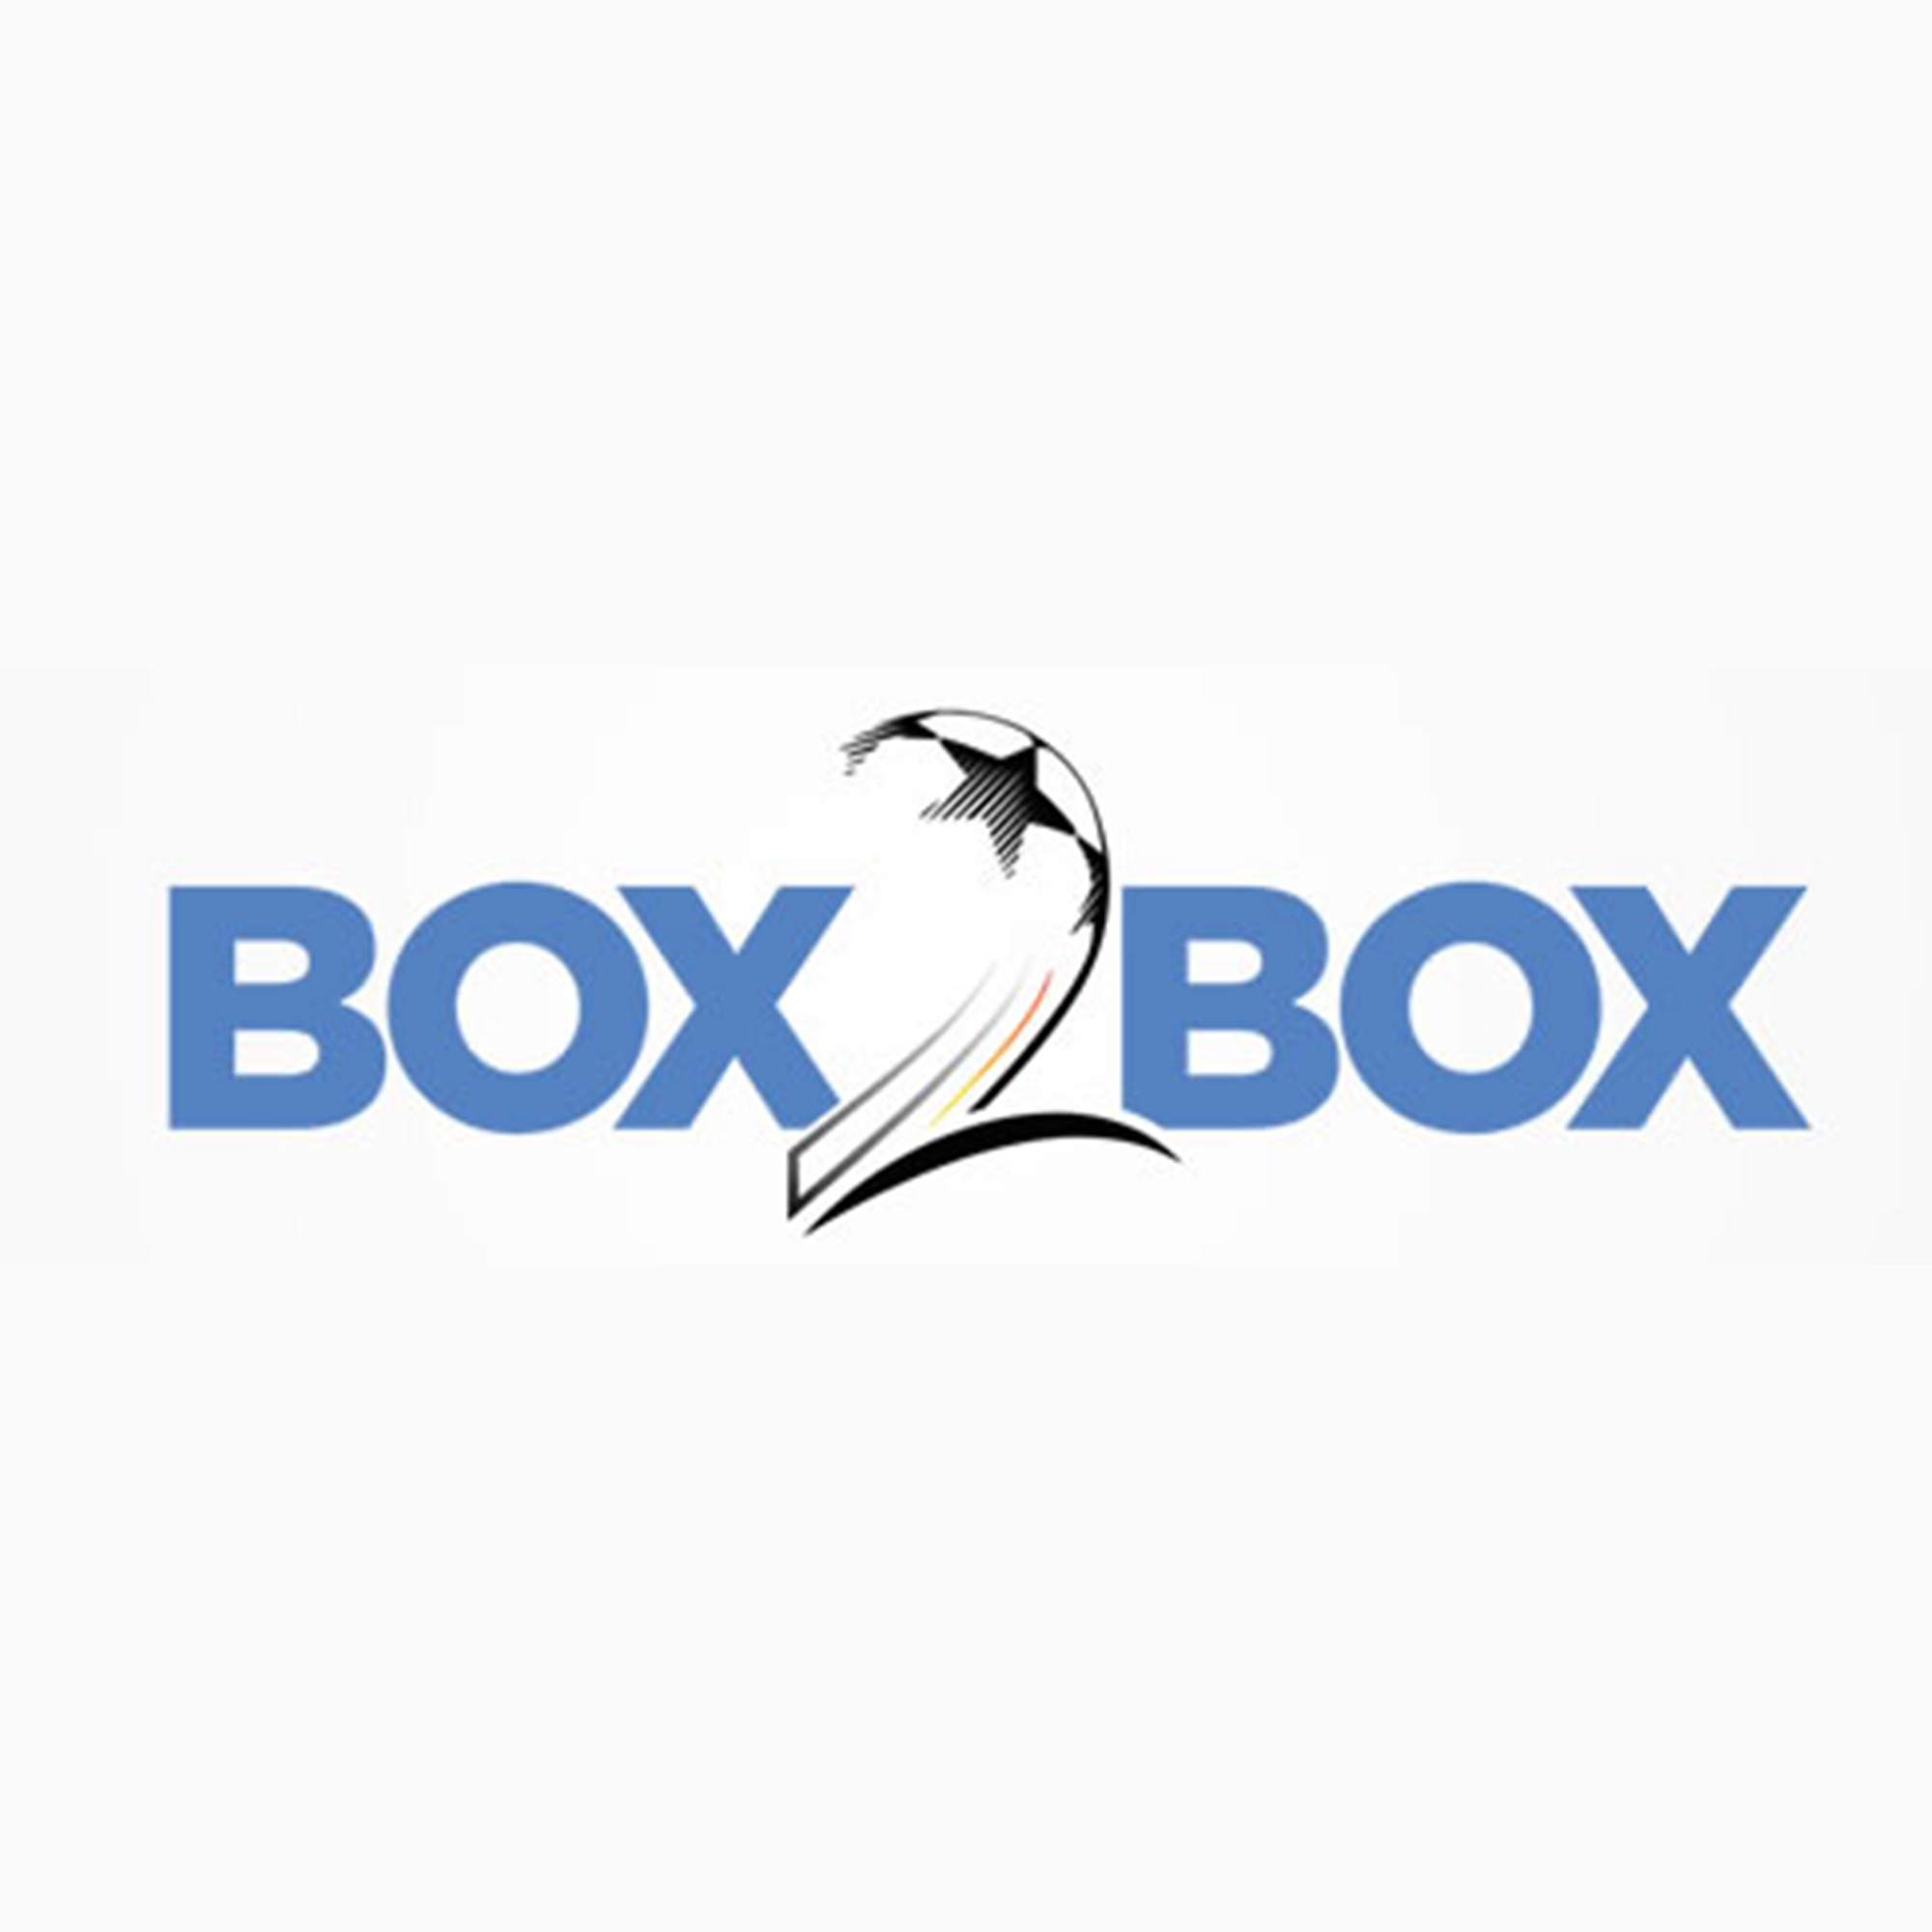 Box2Box George Sephton